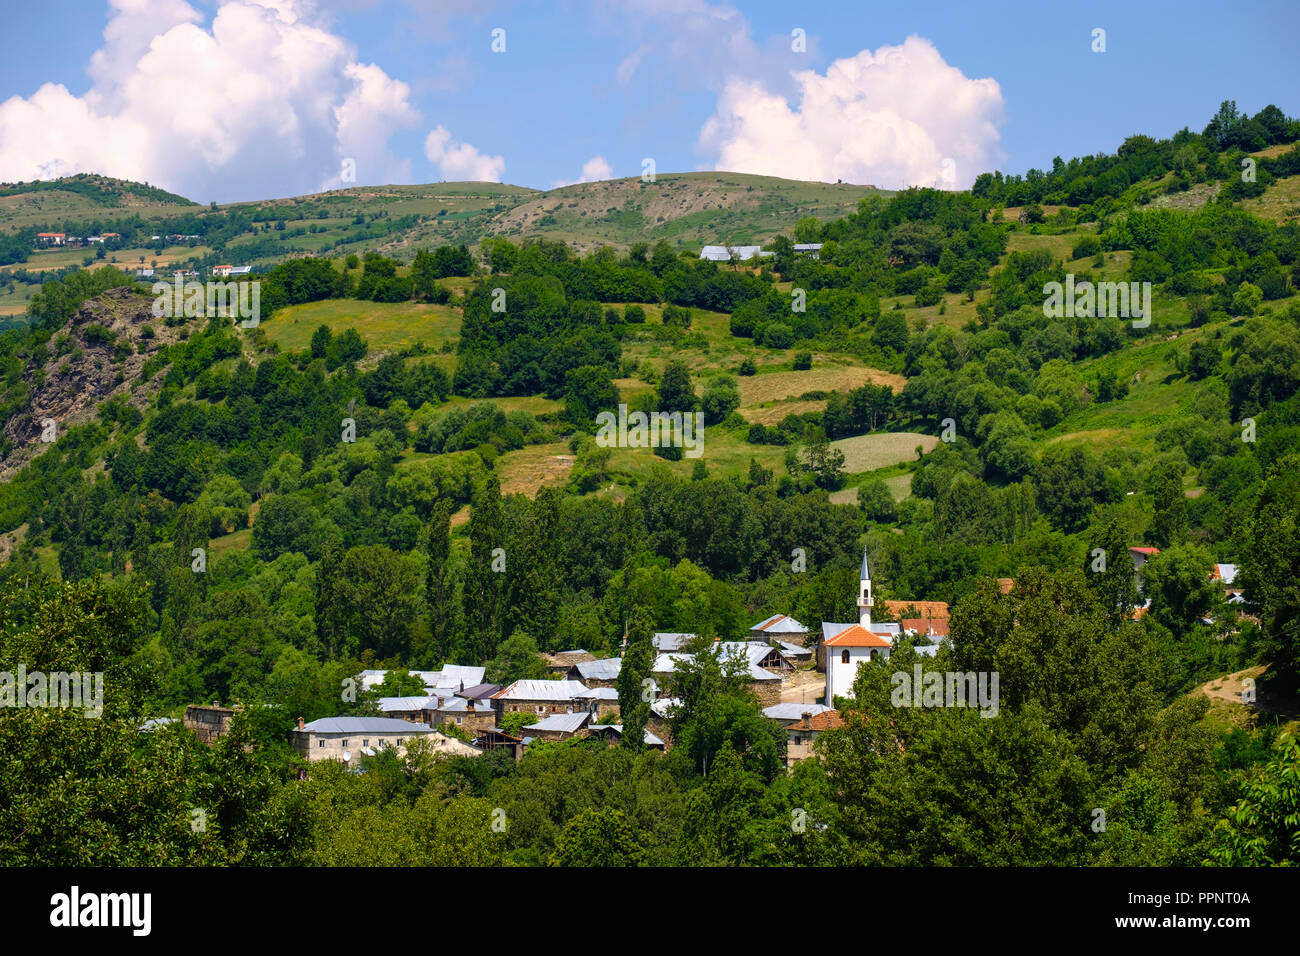 Villaggio Cernjeve, Korab-Koritnik natura park Park, Nord di Peshkopia, Qark Dibra, Albania Foto Stock